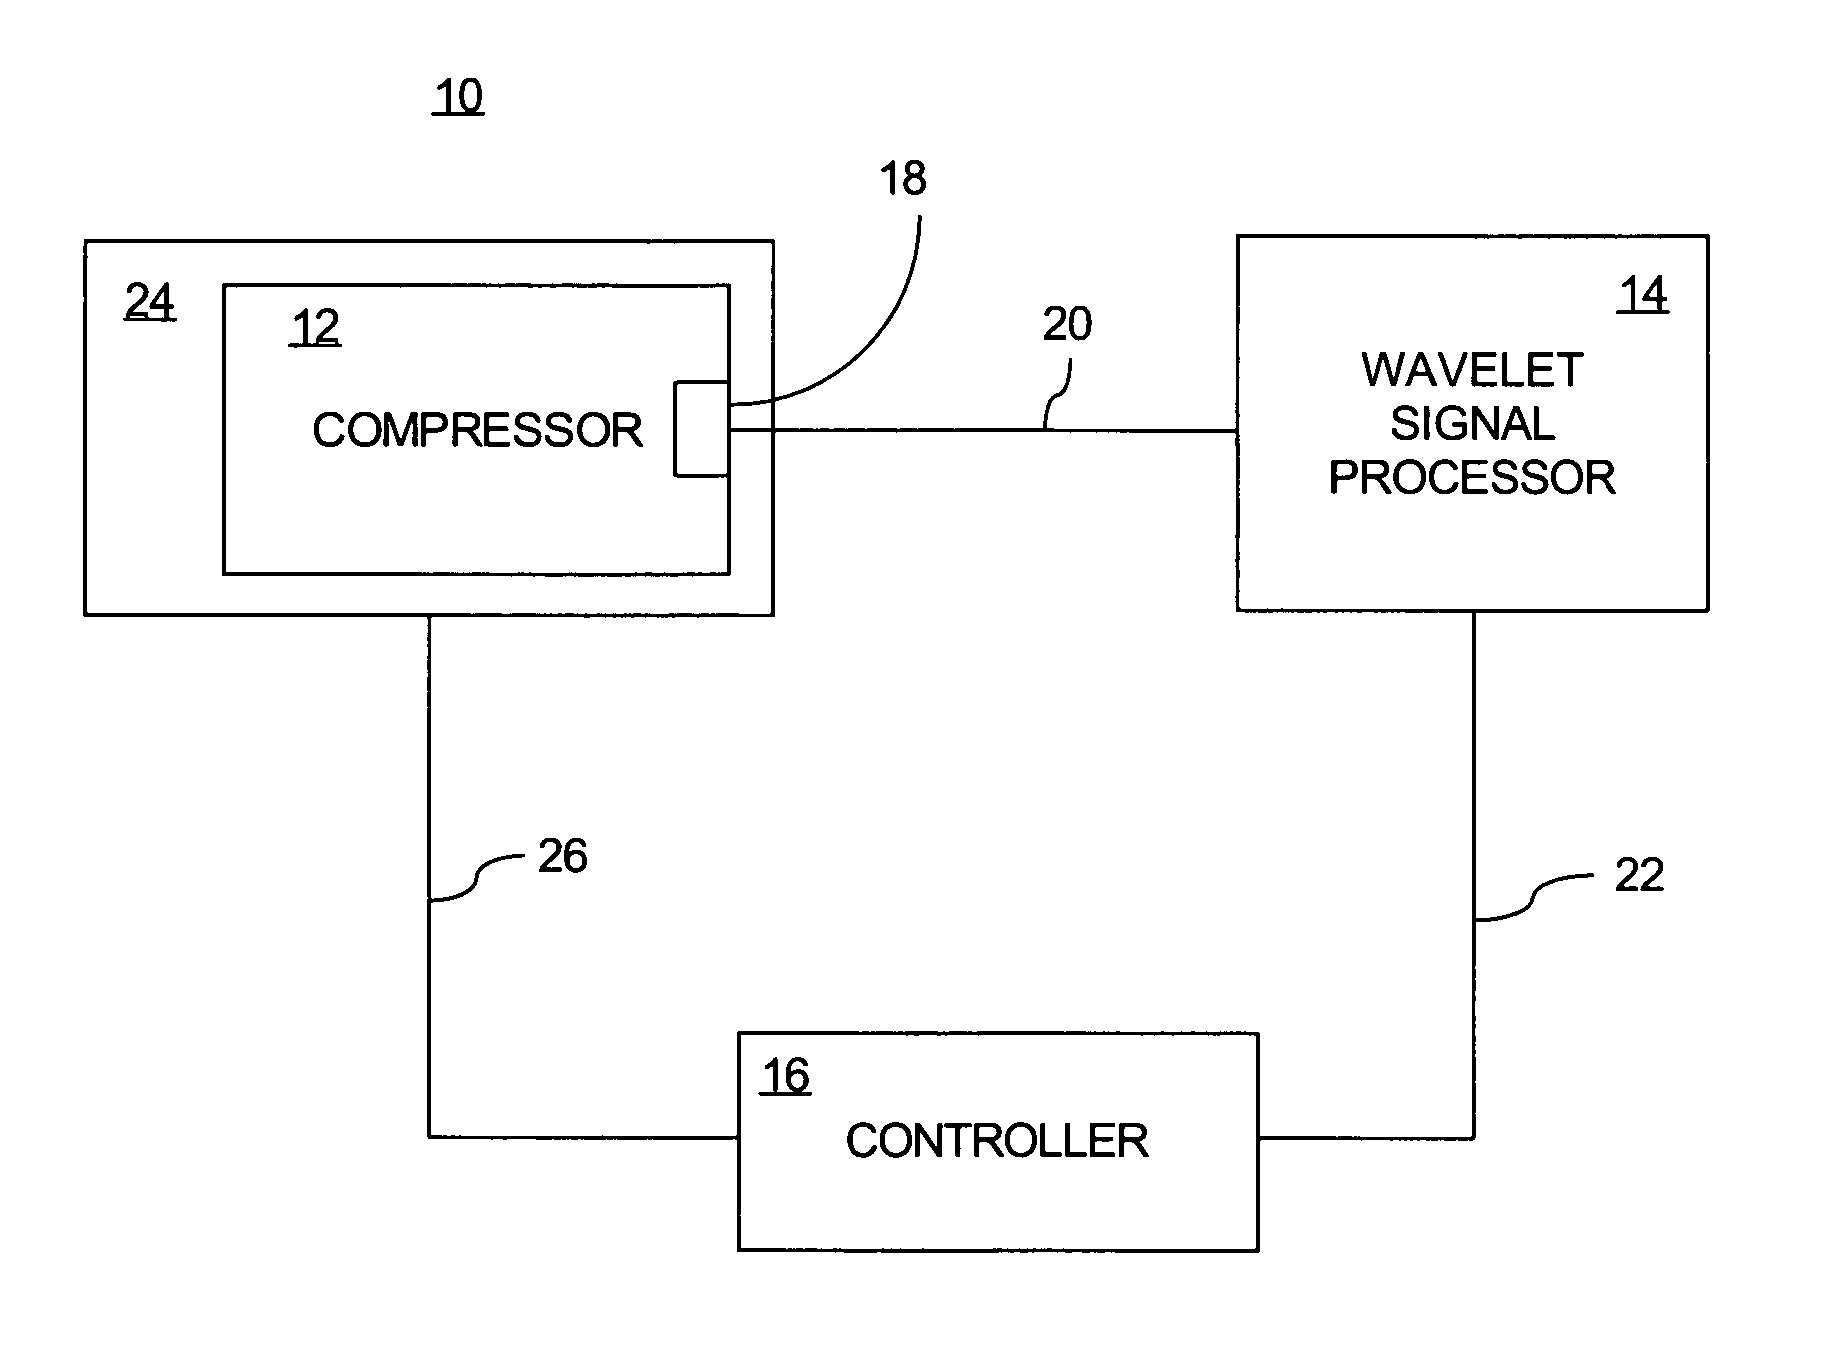 Method for detecting compressor stall precursors